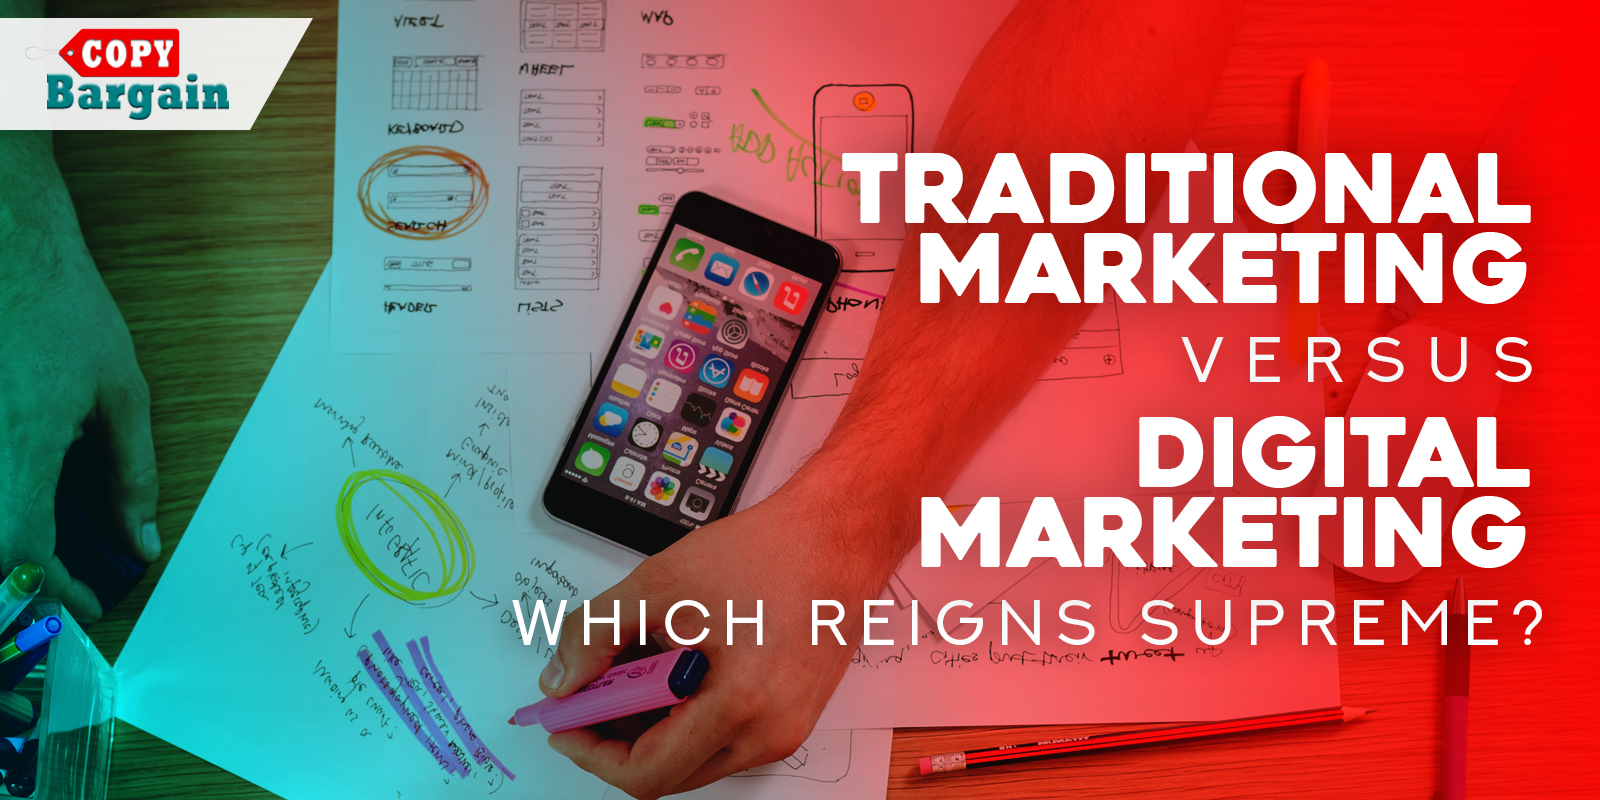 Traditional Marketing versus Digital Marketing